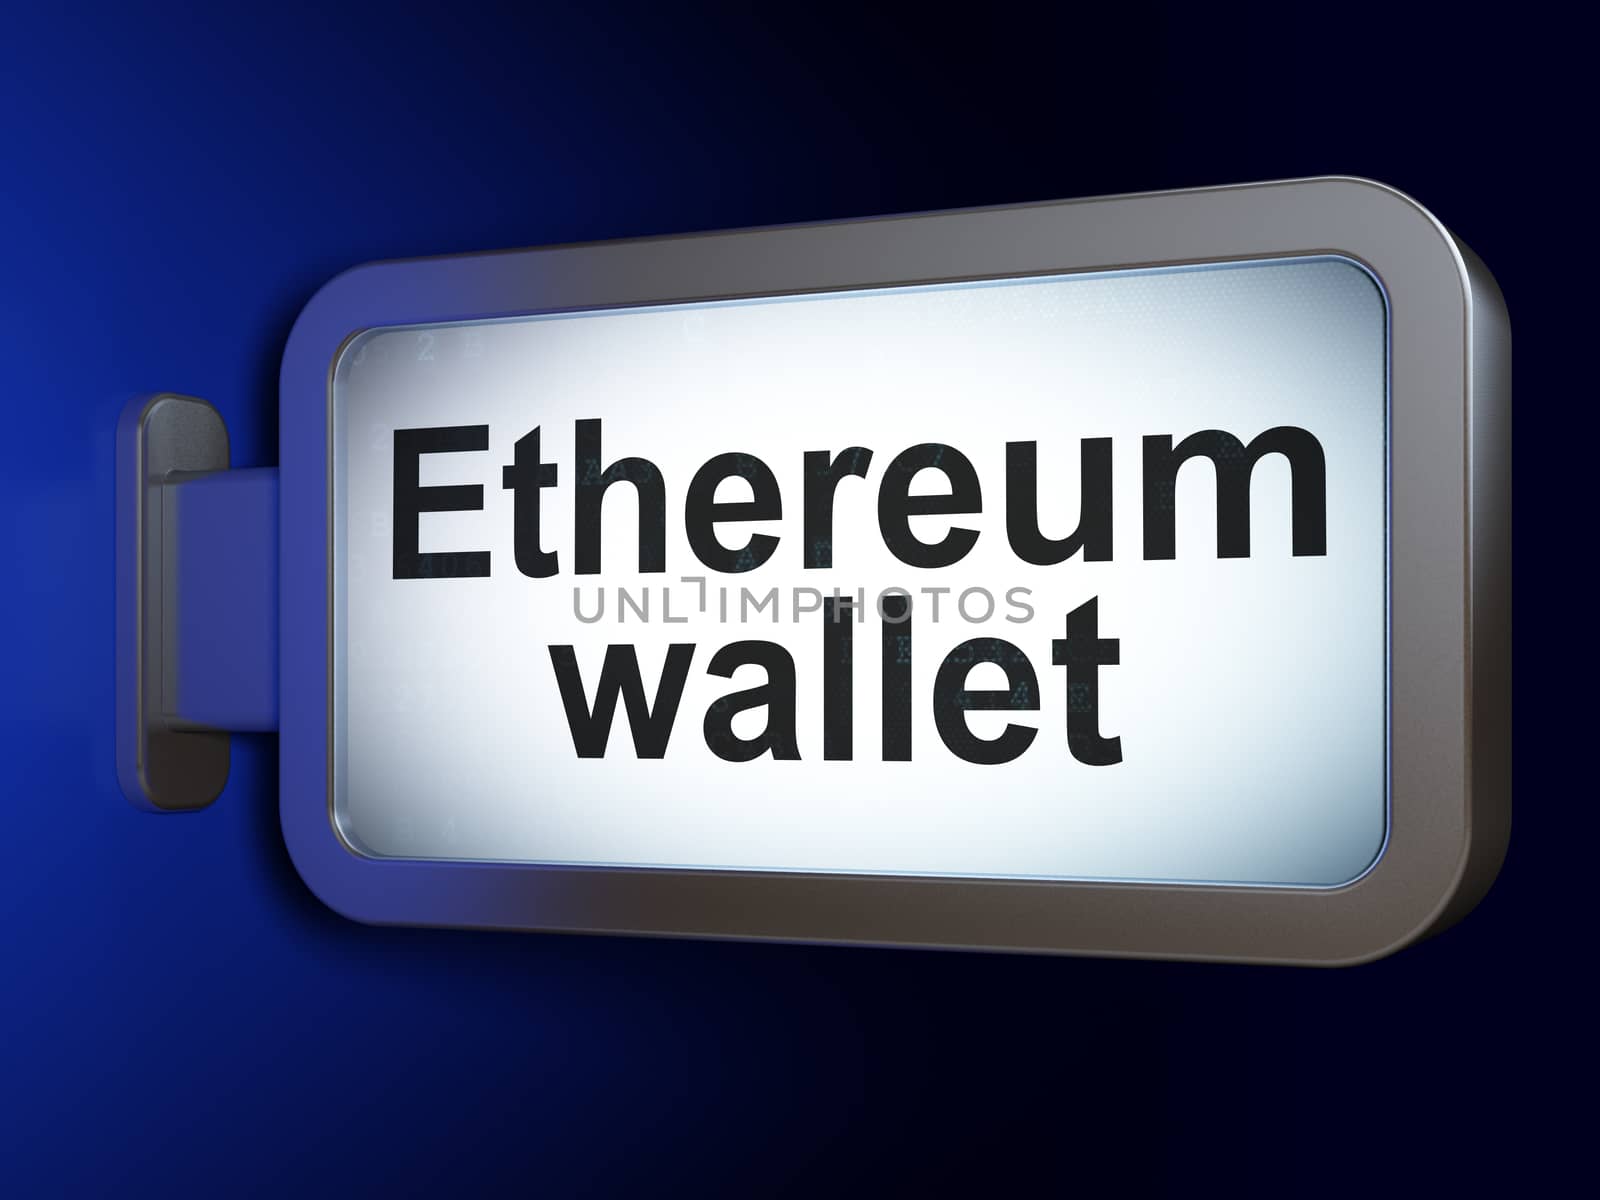 Blockchain concept: Ethereum Wallet on advertising billboard background, 3D rendering